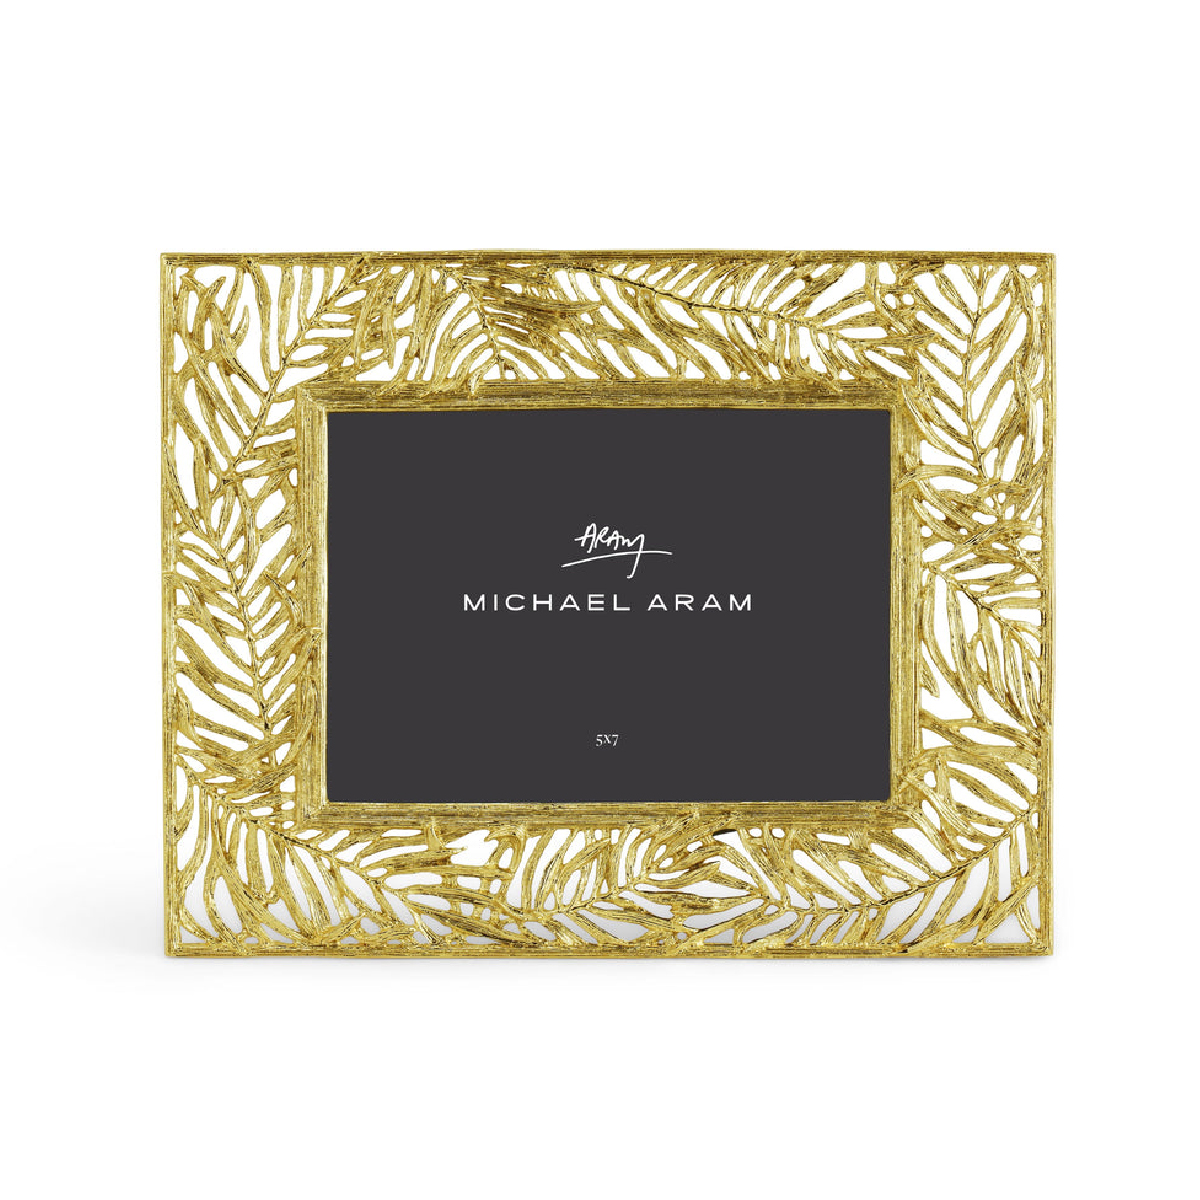 Michael Aram - Gold Palm Frond 5x7 Frame